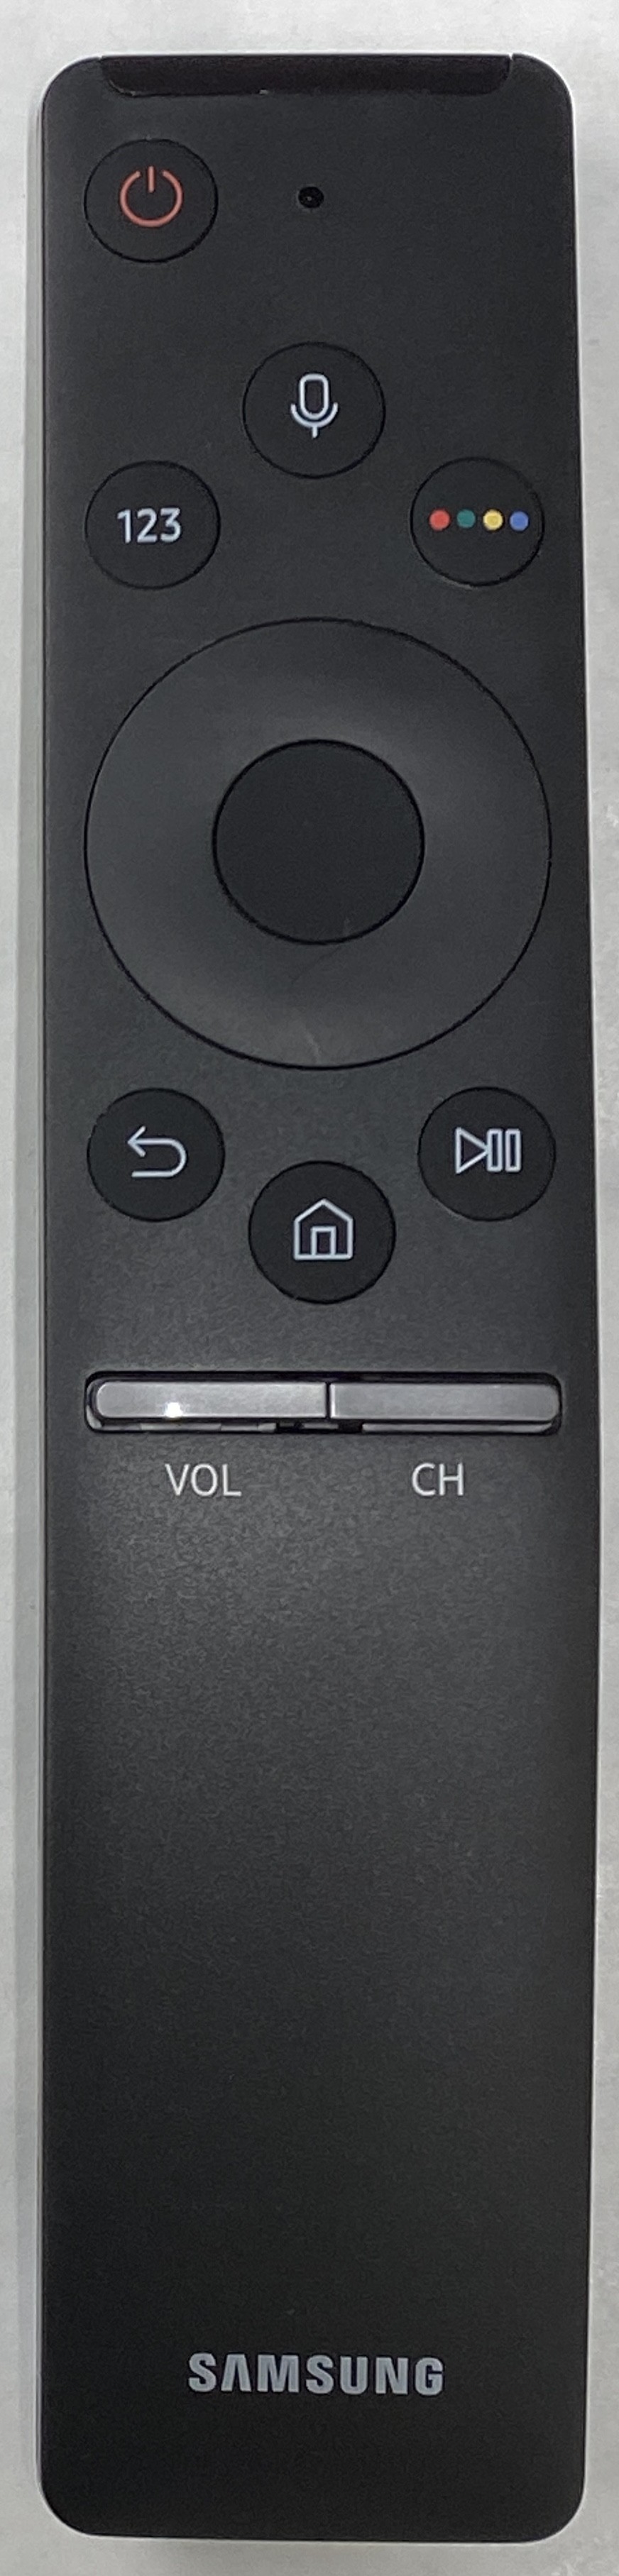 SAMSUNG UE65KS7000S Smart Remote Control Original